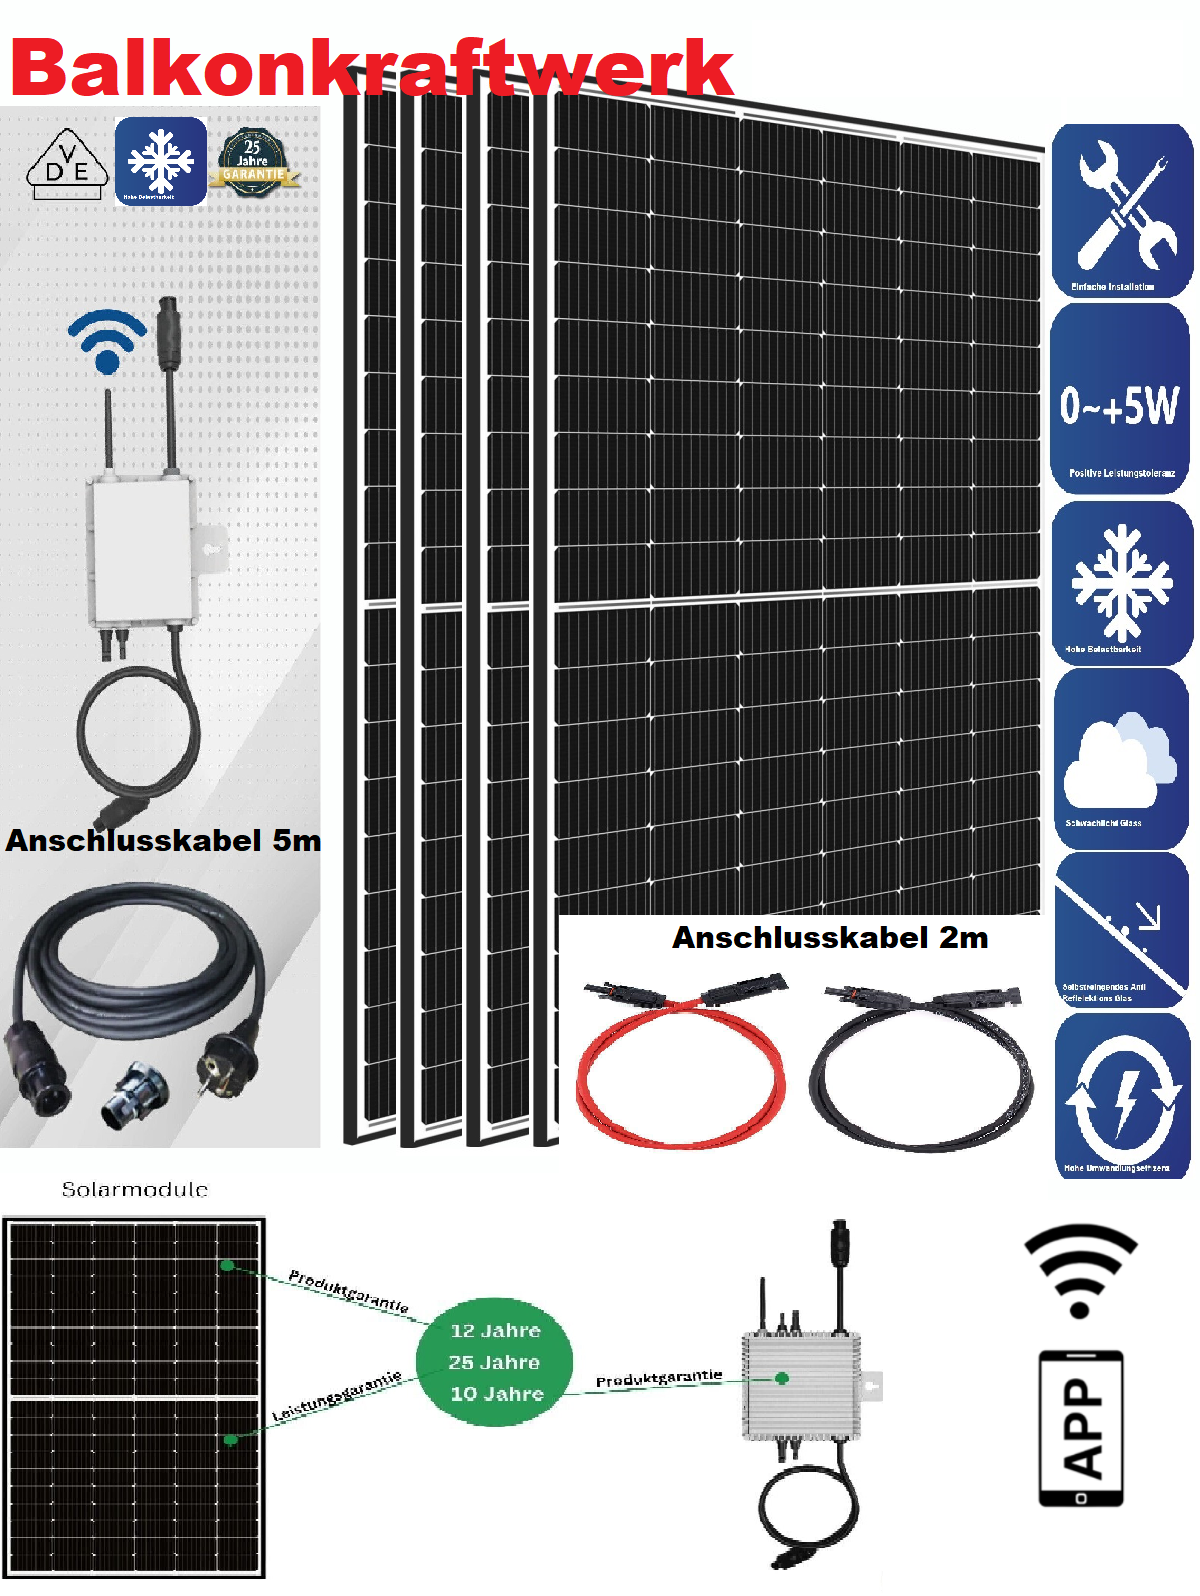 Balkonkraftwerk 1640 W/ 1200 W Photovoltaik Solaranlage Steckerfertig WIFI Smart